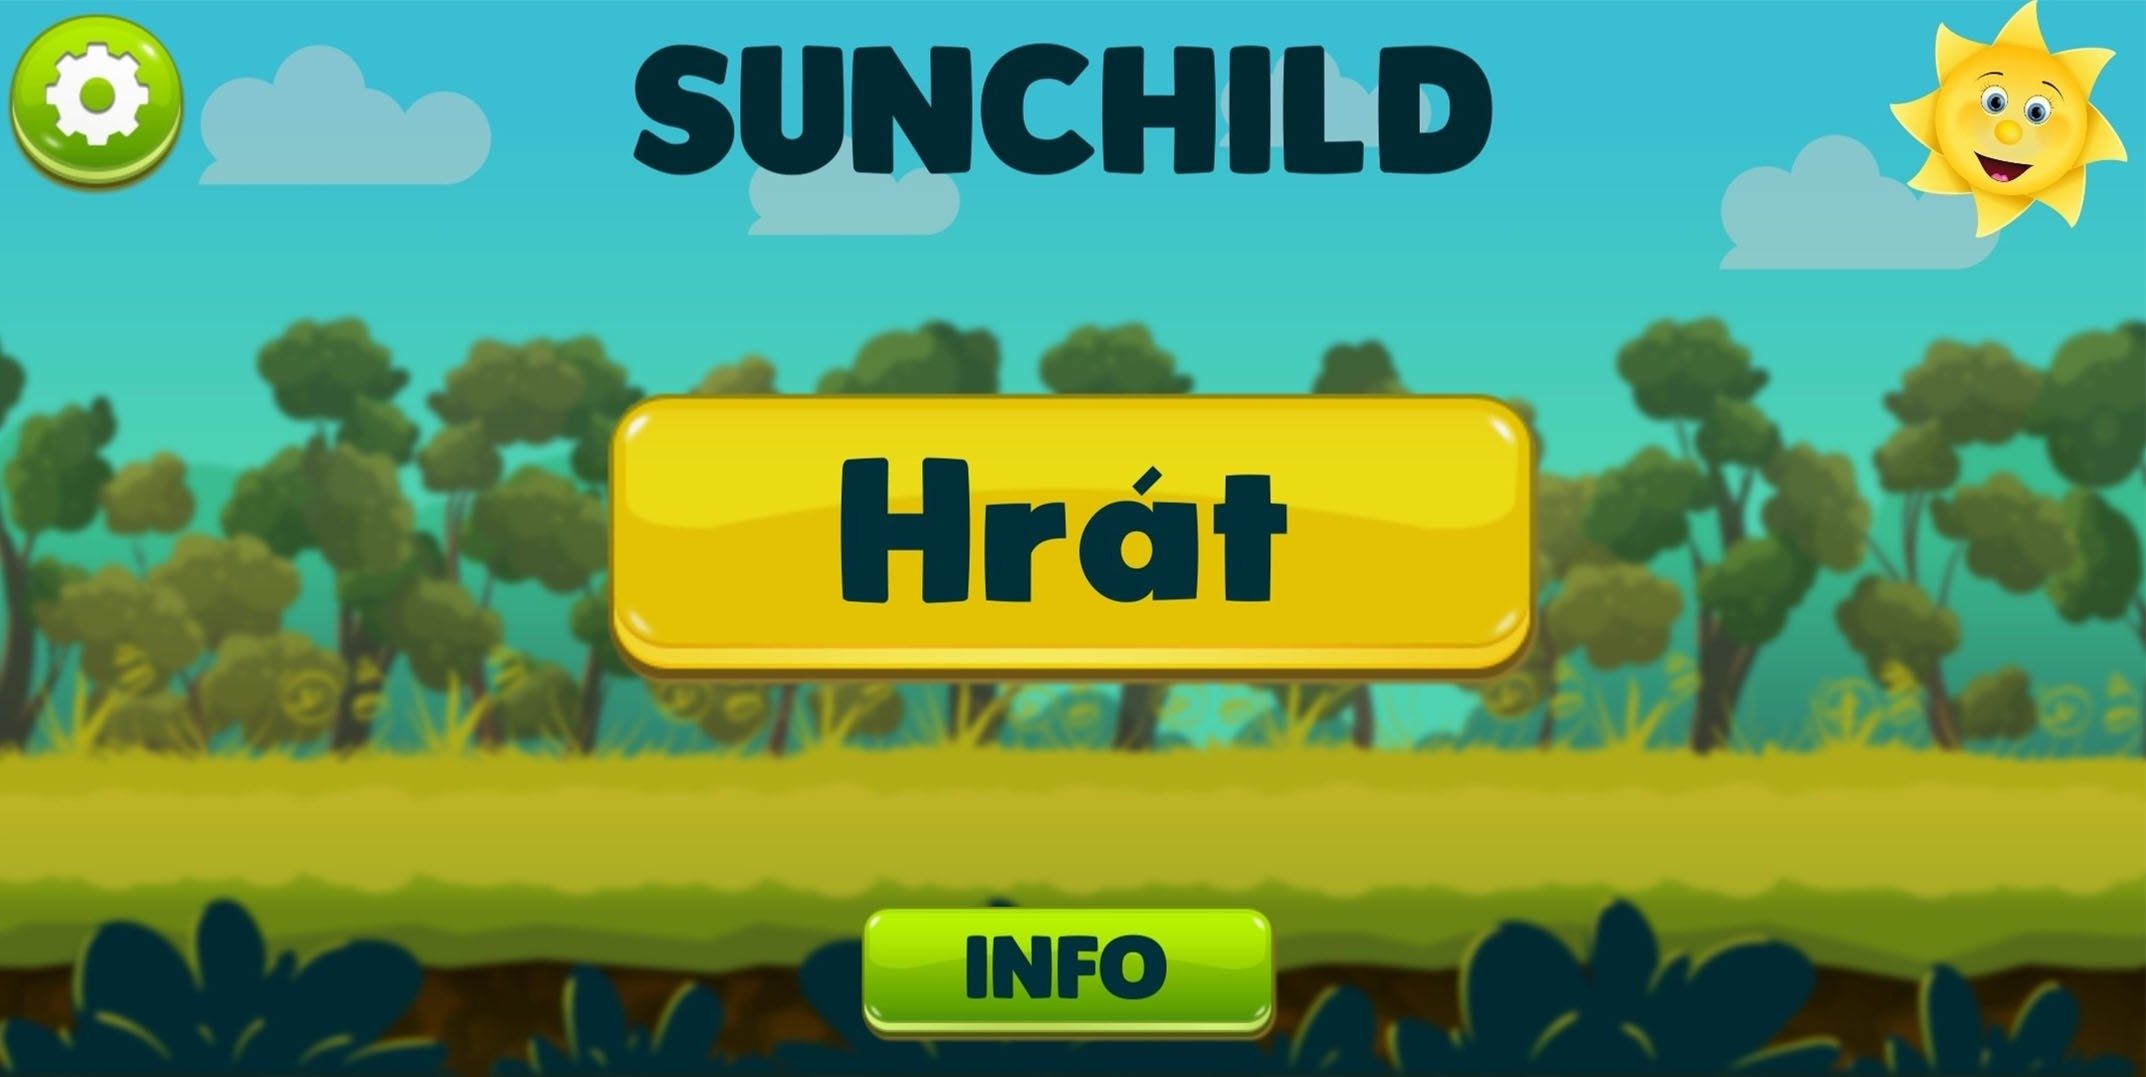 Sunchild